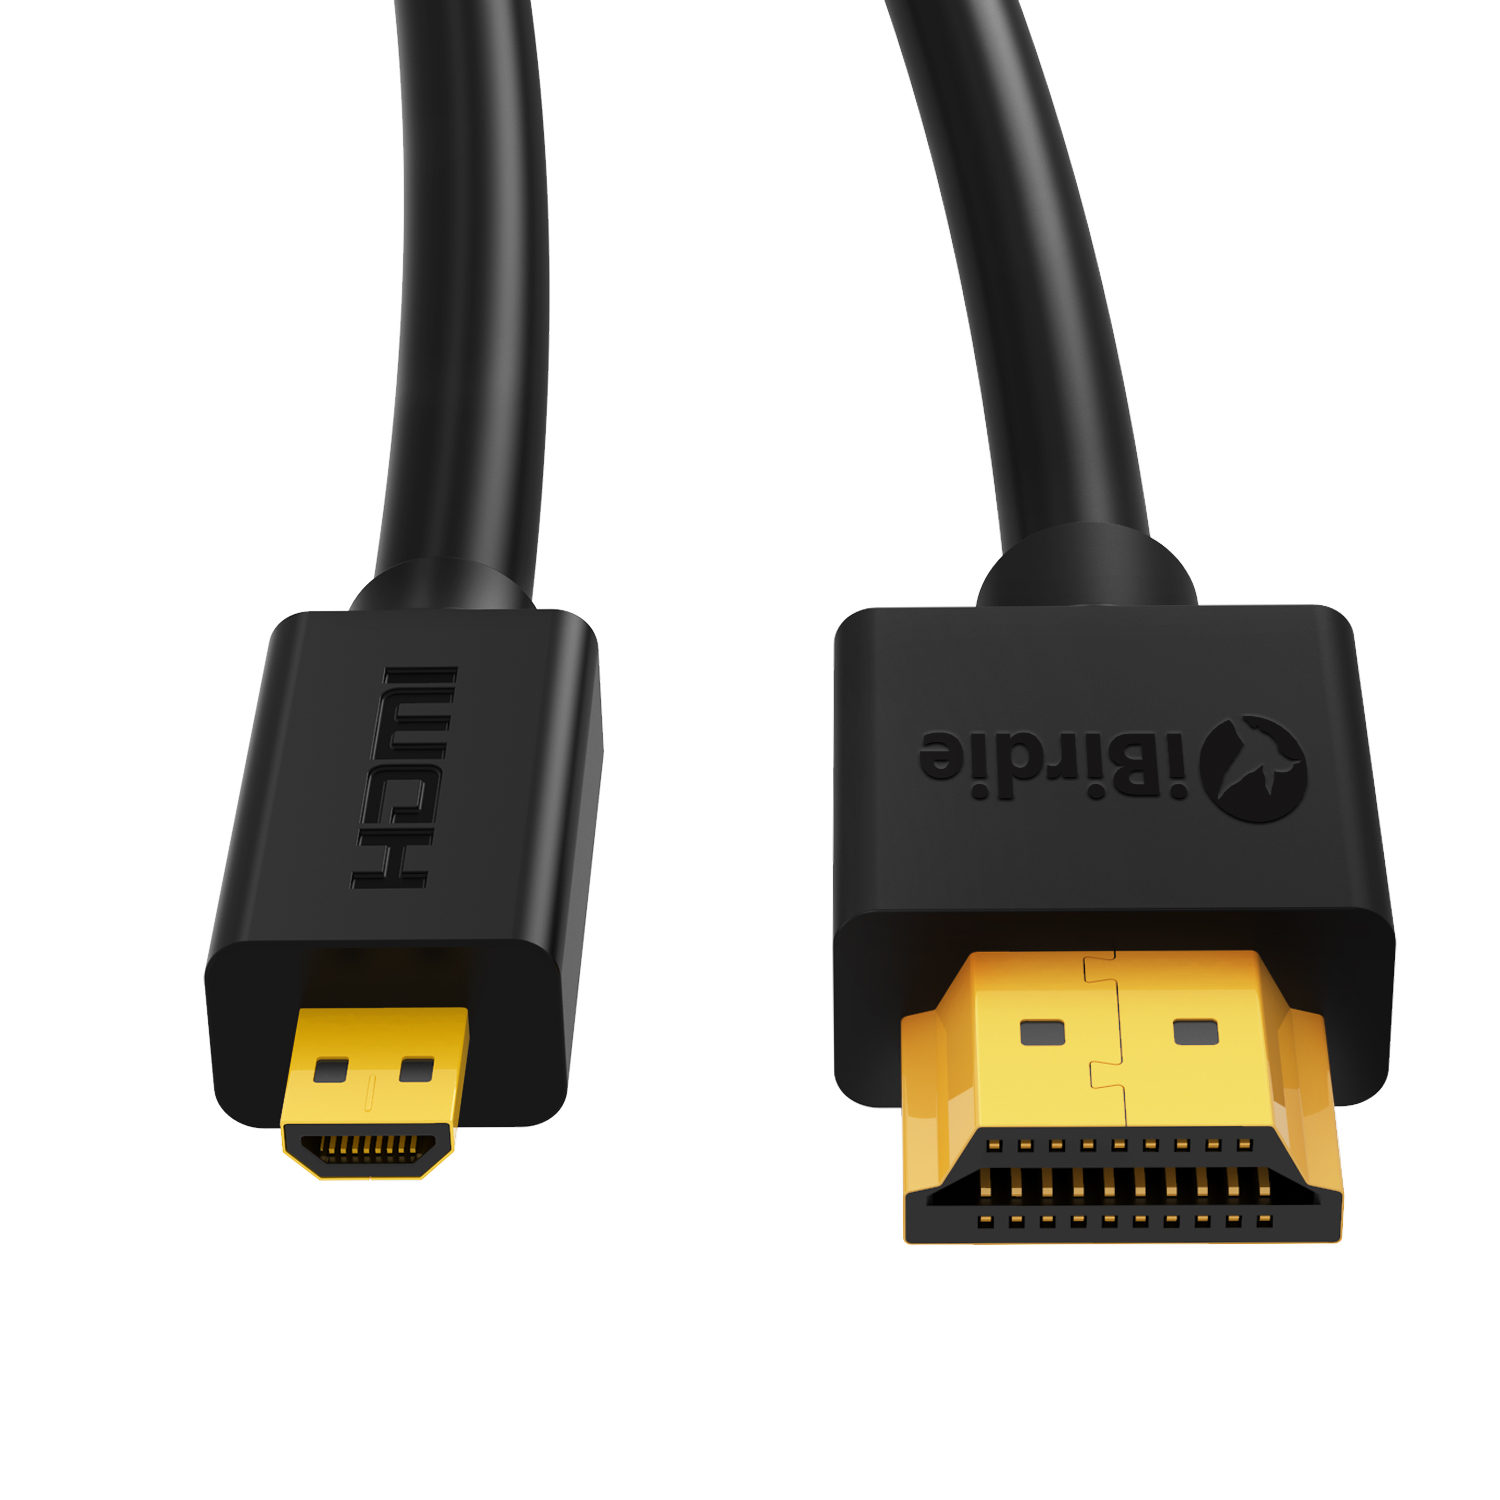 Buy HDMI Cables Online - Micro HDMI Cables Online - ThinkRobotics